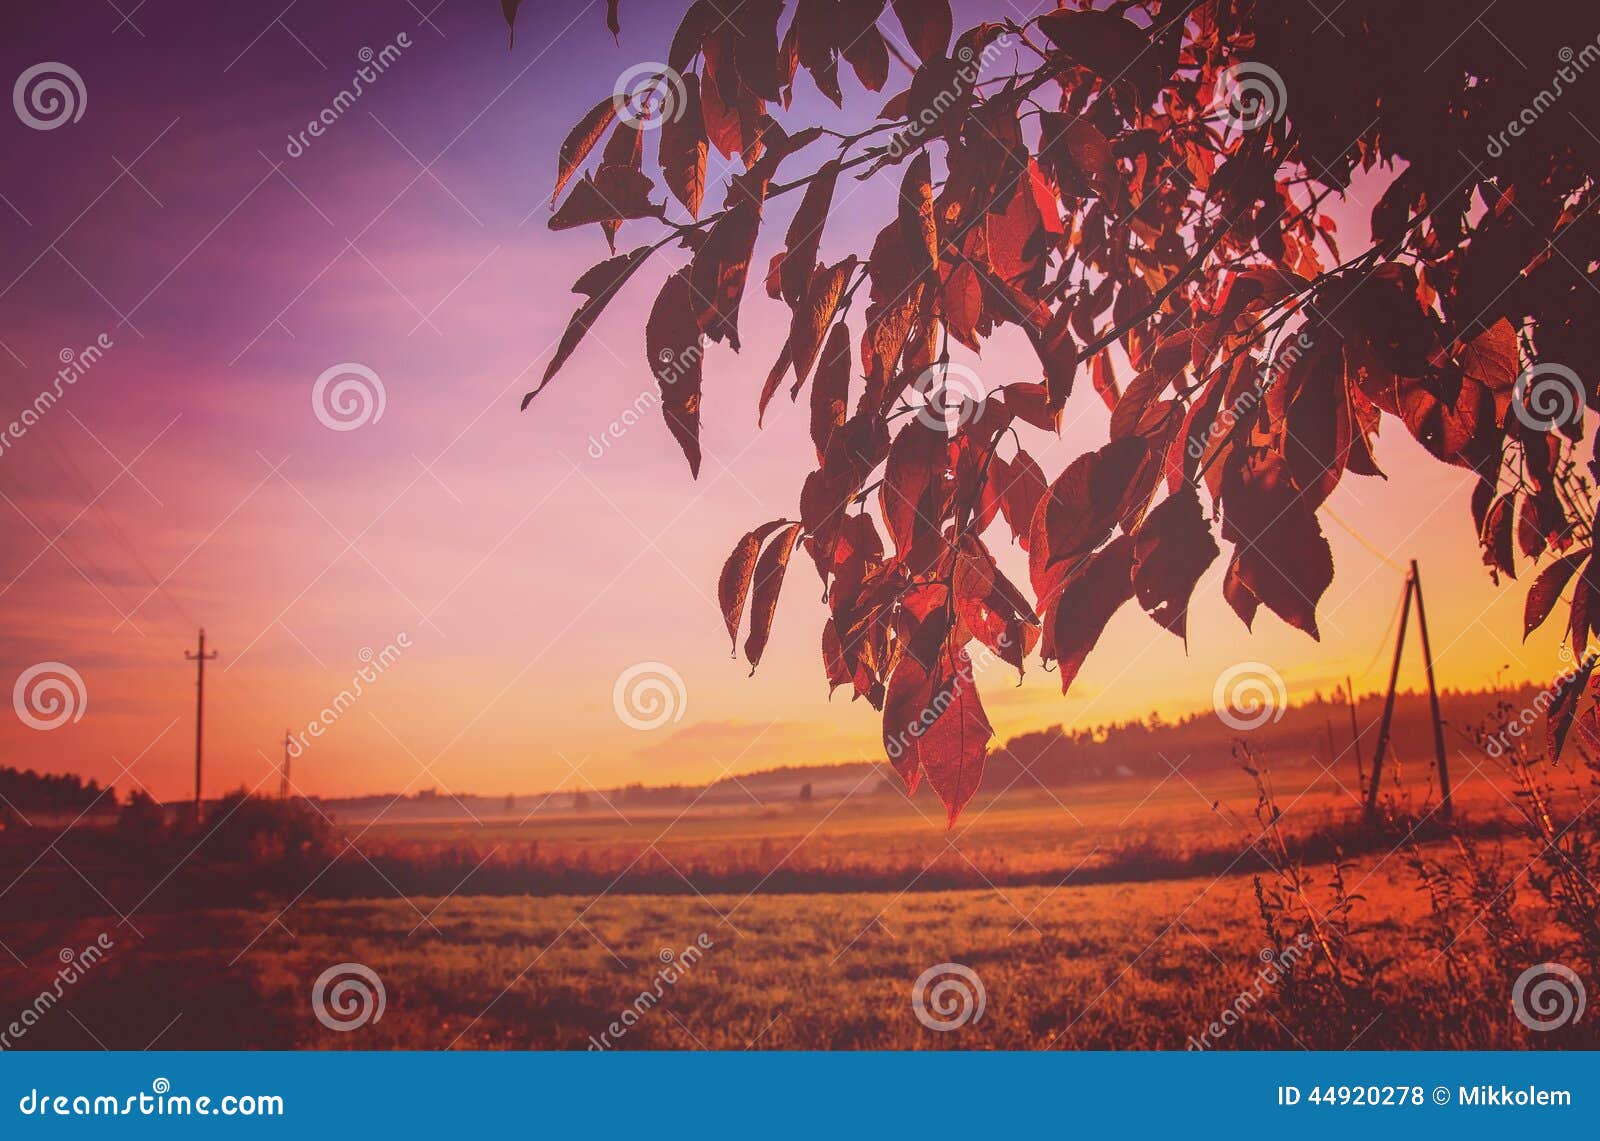 Beautiful Nature Background Stock Photo - Image of season, scene: 44920278